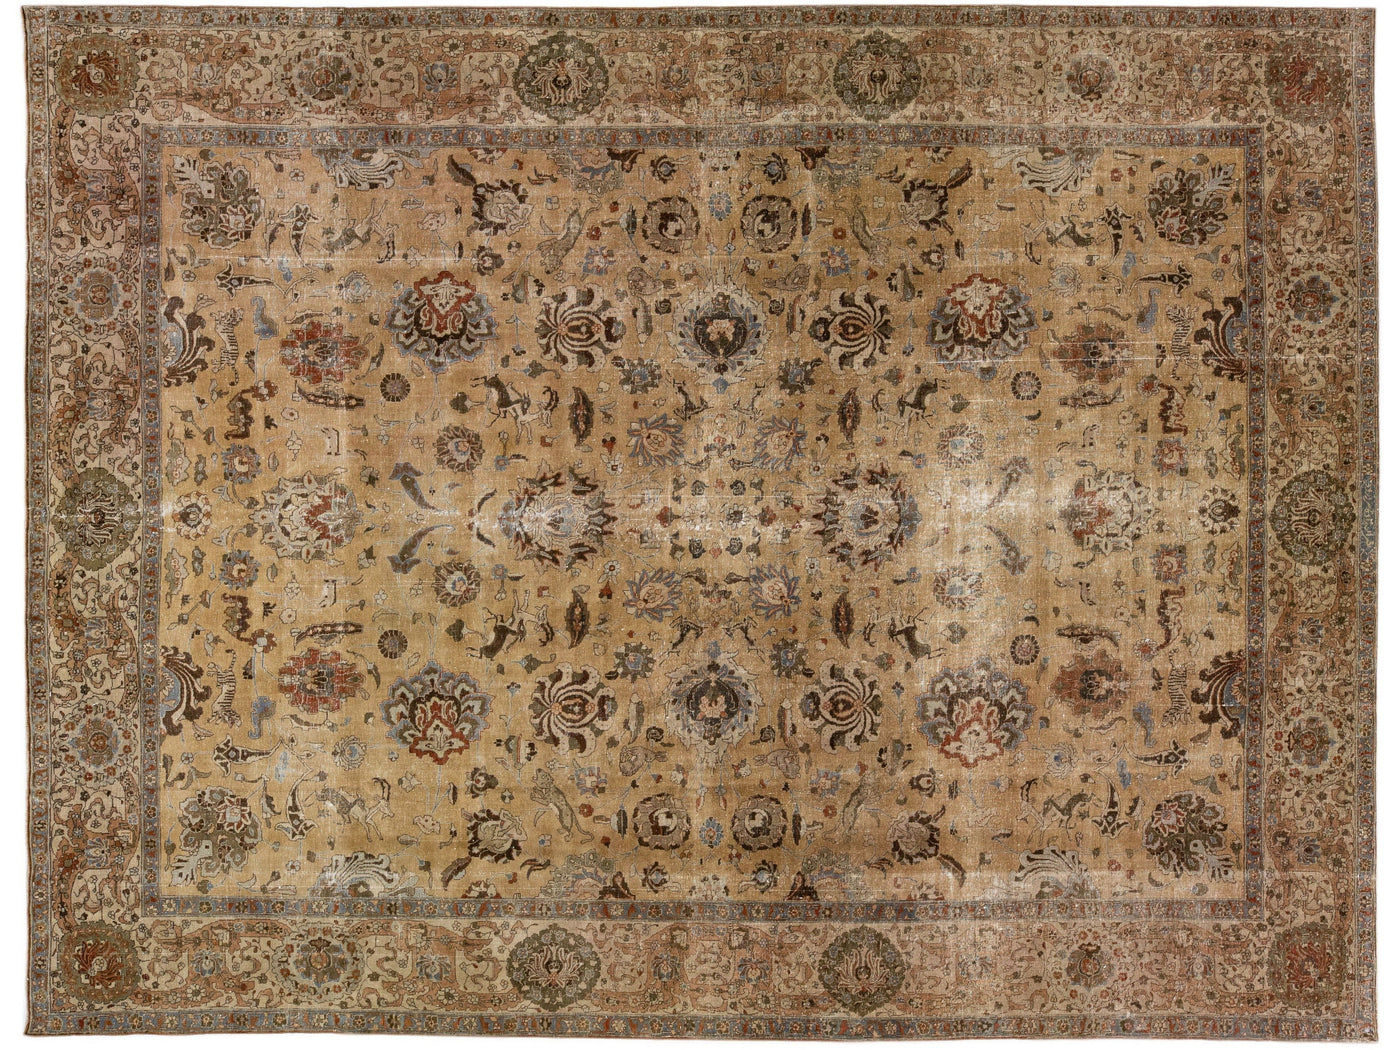 Antique Tabriz Handmade Brown Persian Wool Rug With Floral Motif